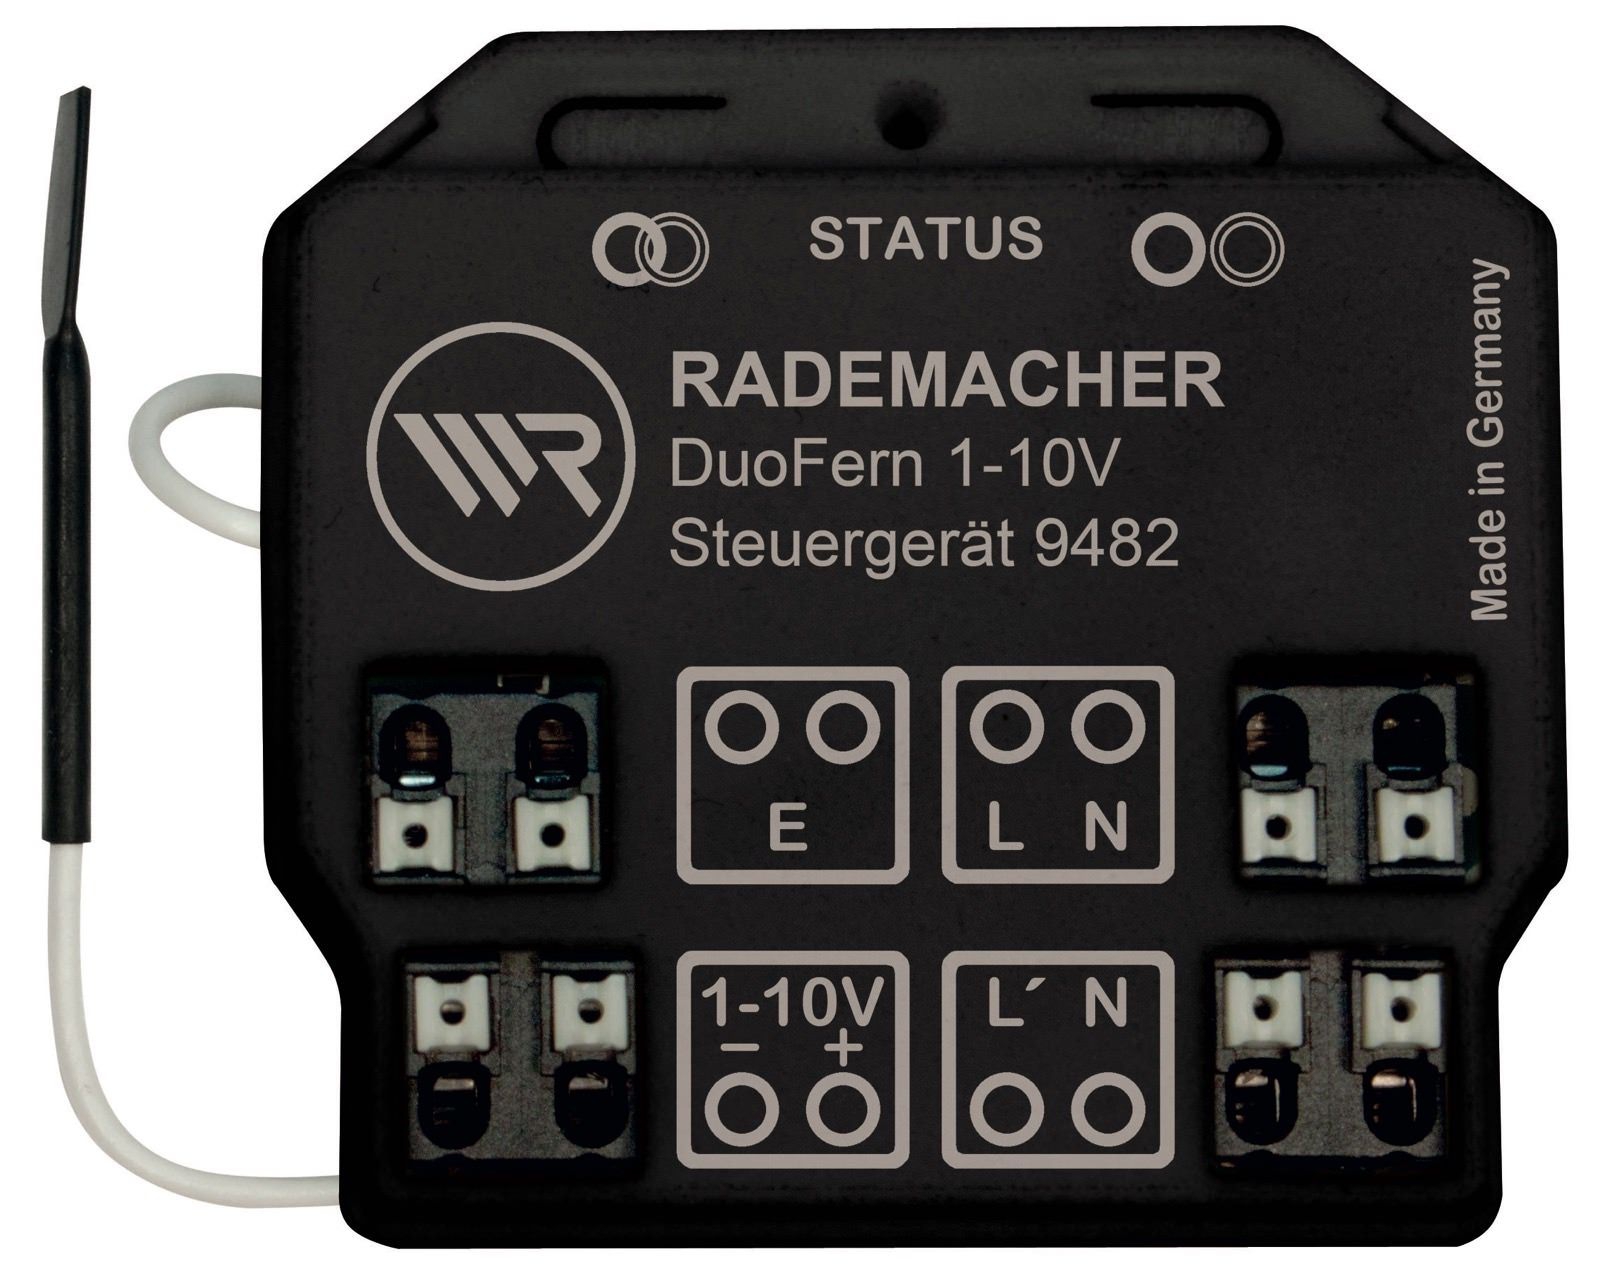 Rademacher DuoFern 1-10V Steuergerät 9482